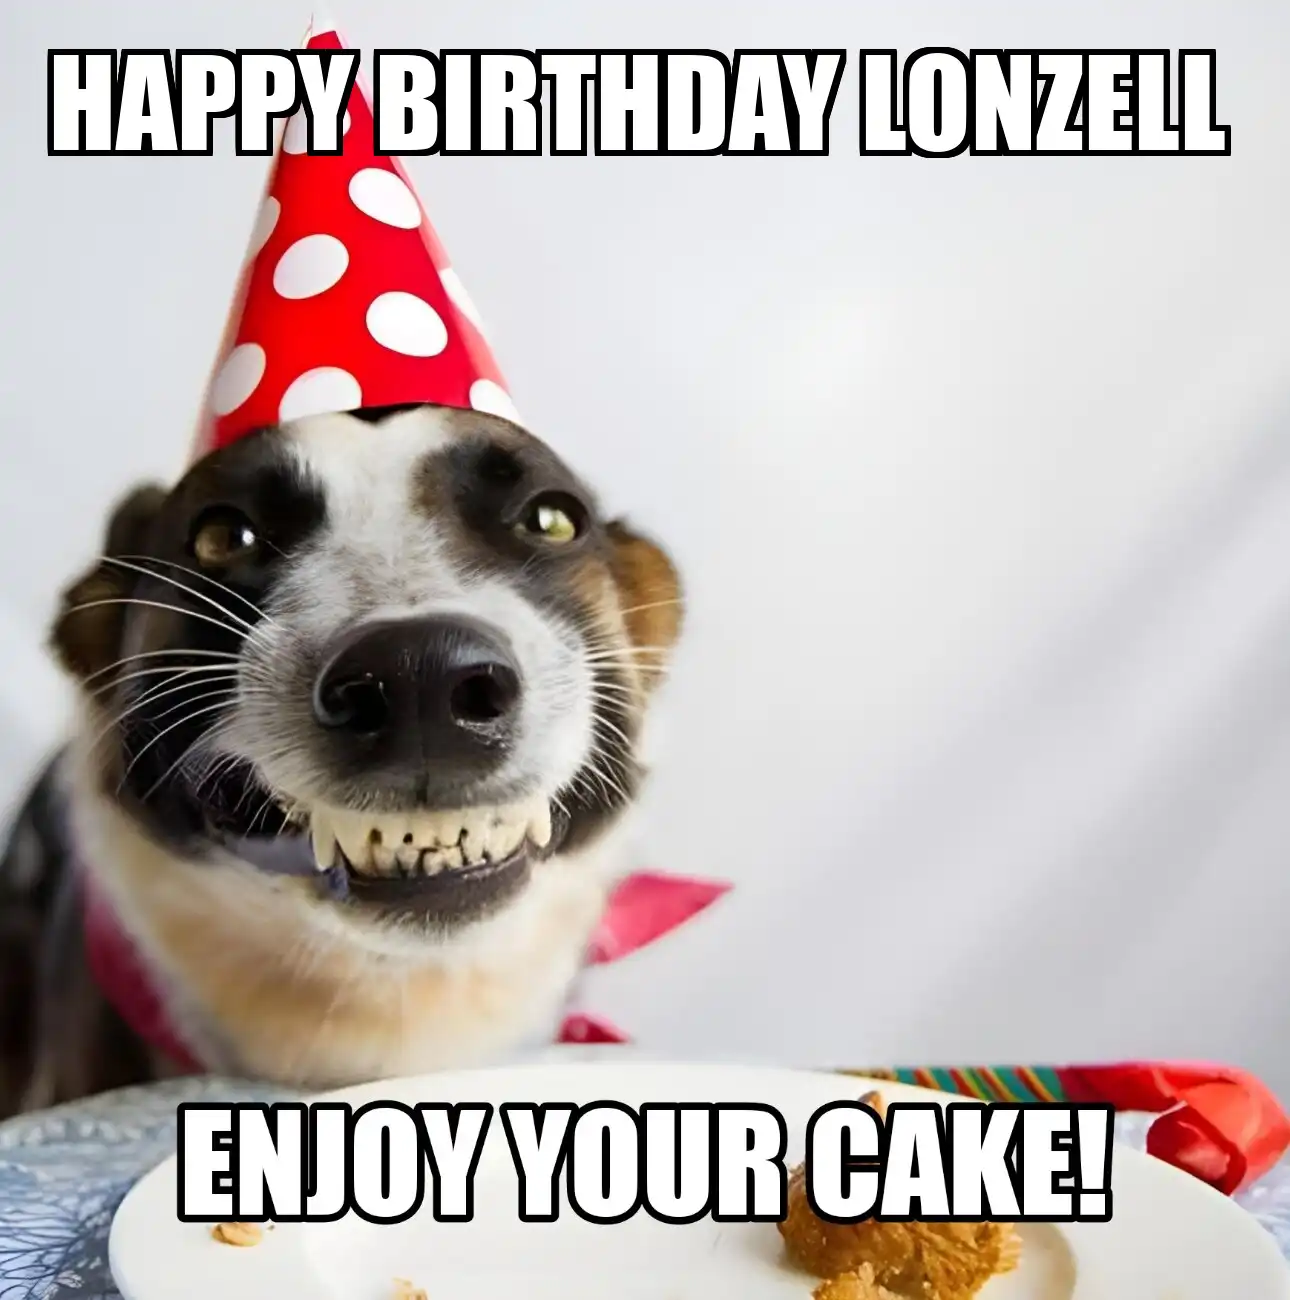 Happy Birthday Lonzell Enjoy Your Cake Dog Meme